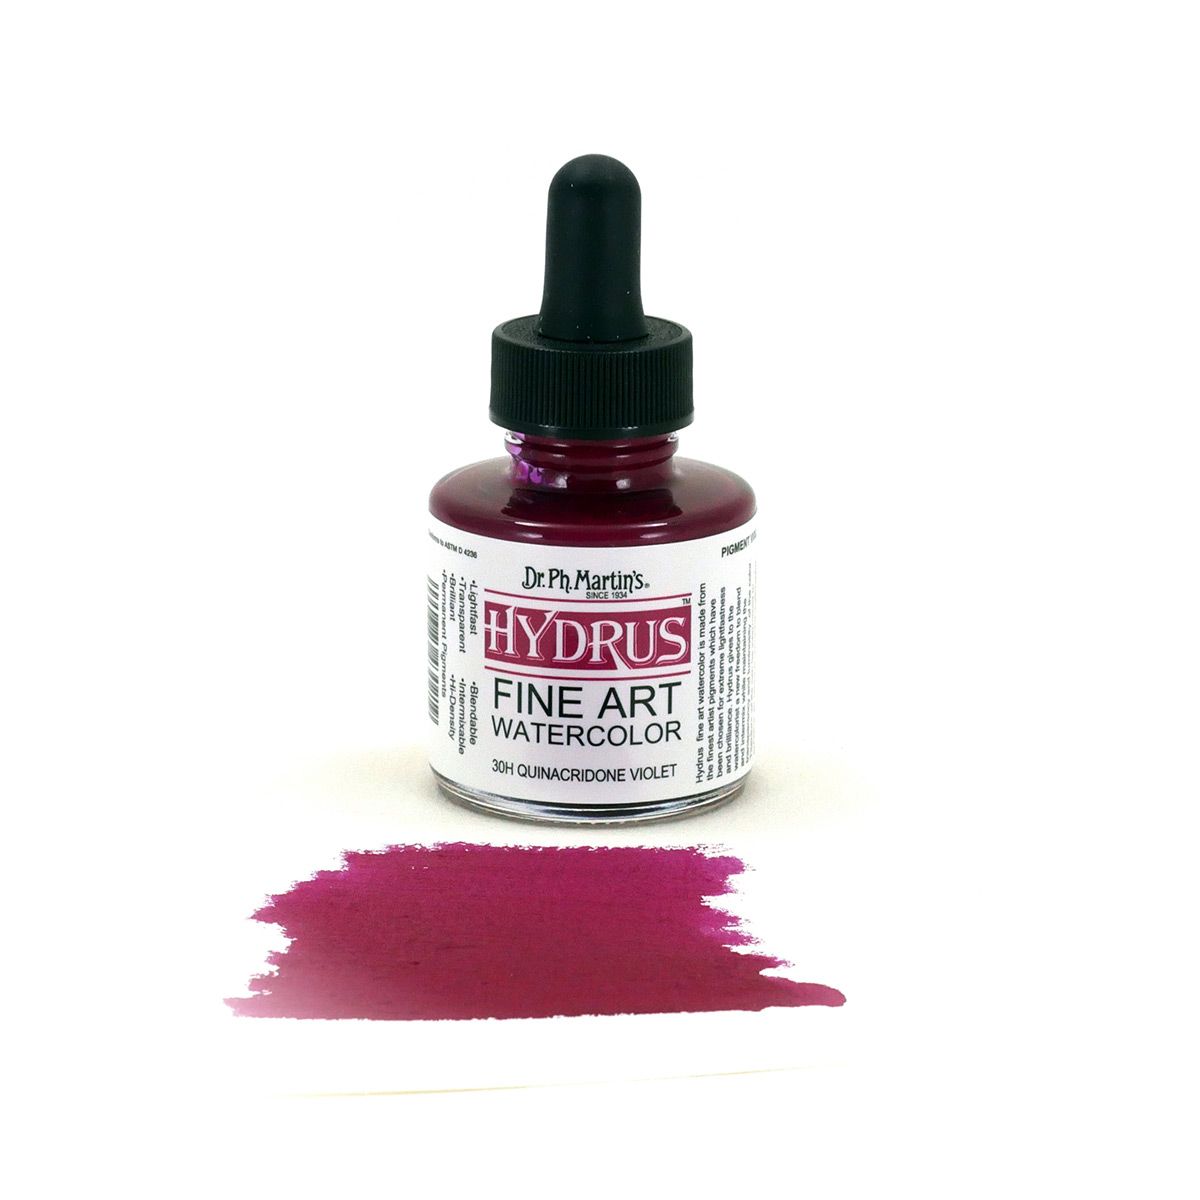 Hydrus Watercolor 1 oz Bottle - Quinacridone Violet